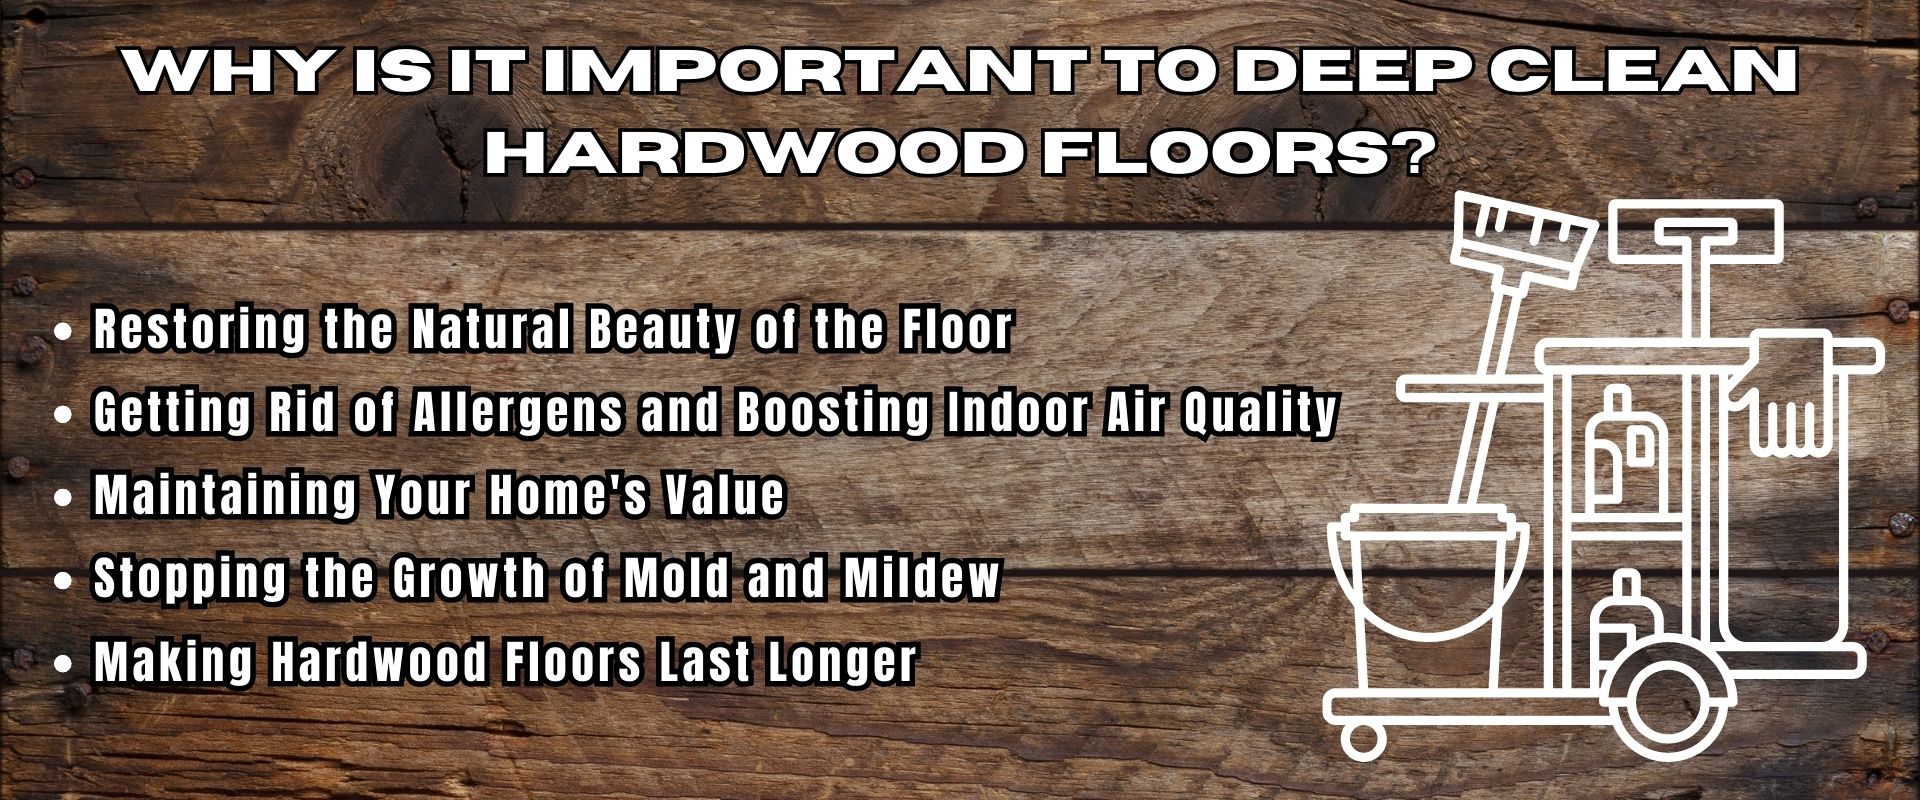 Important-to-Deep-Clean-Hardwood-Floors